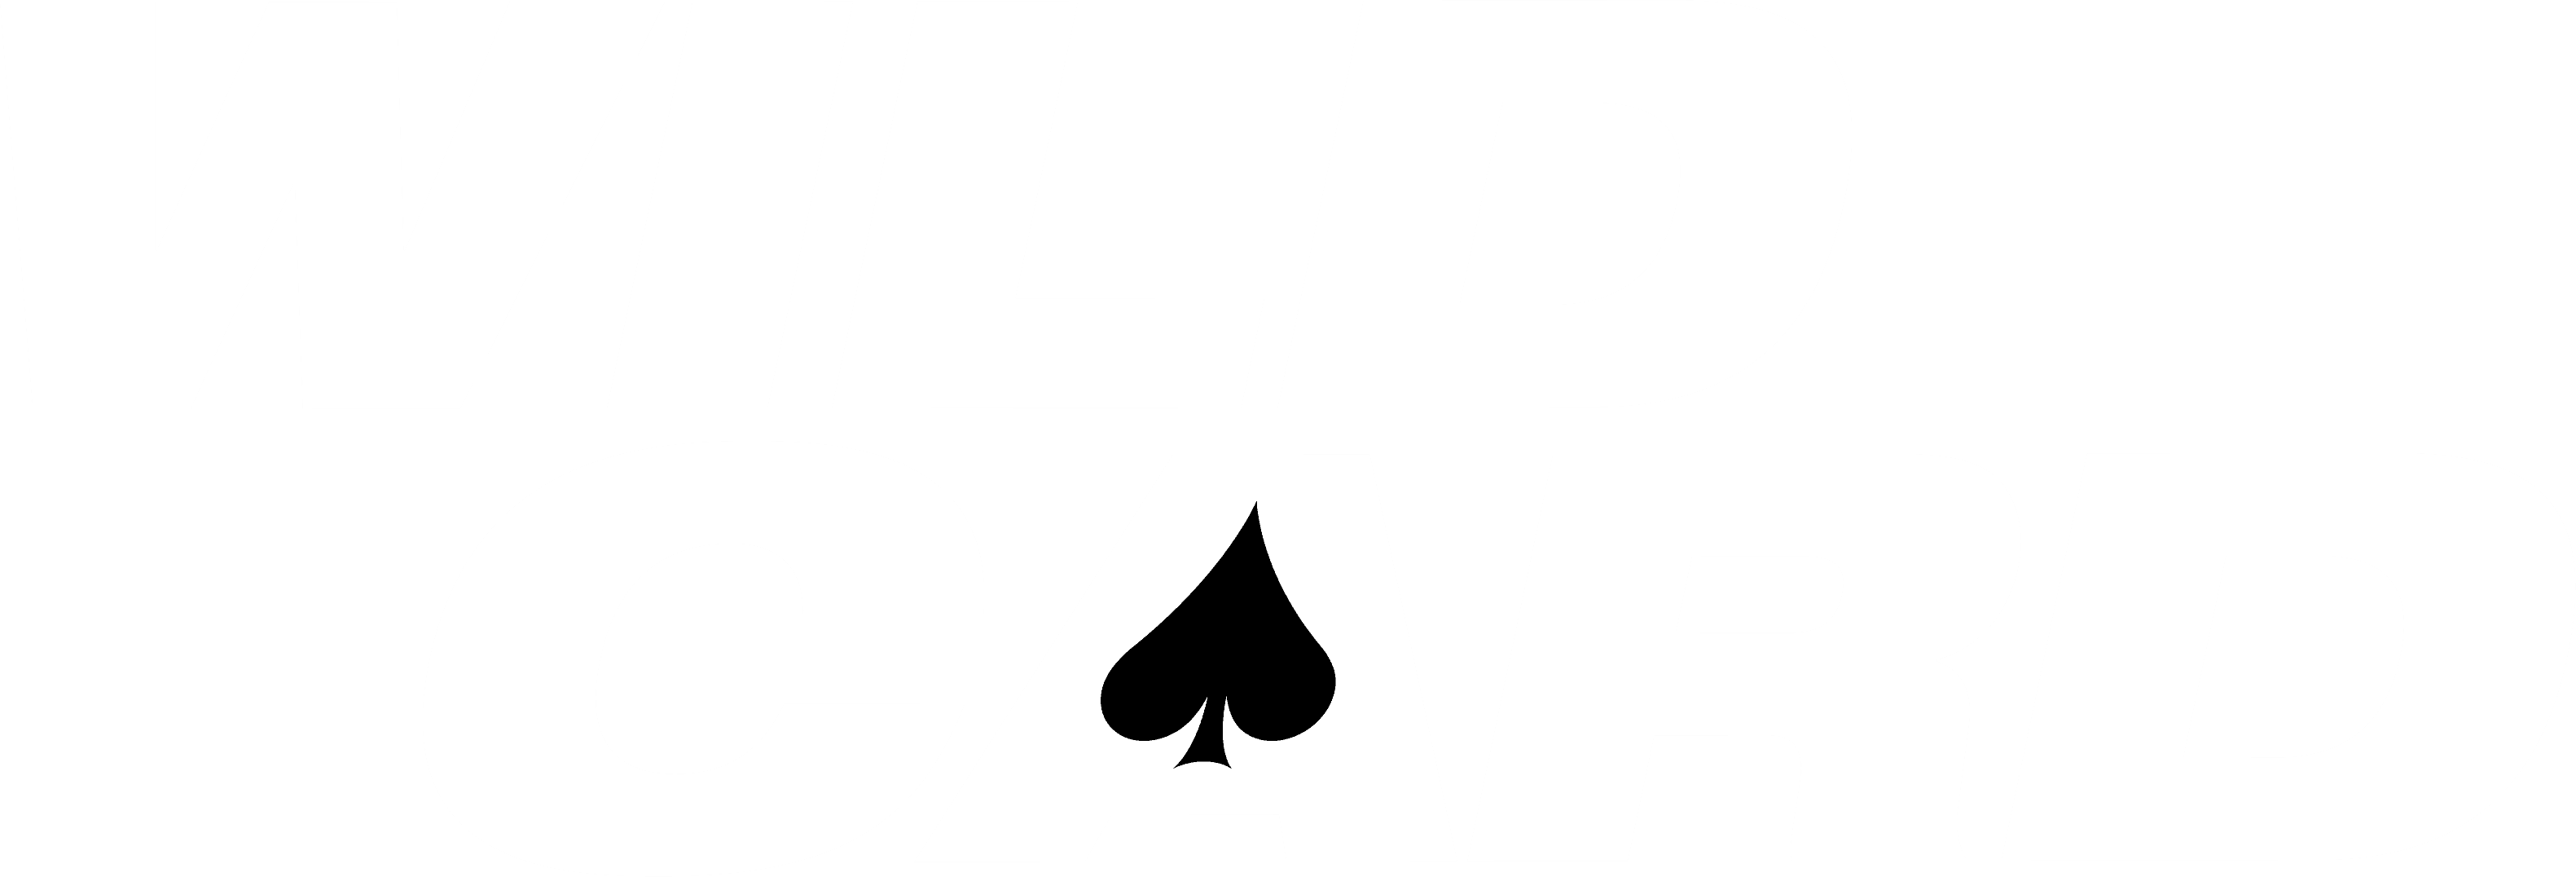 Wild Card logo